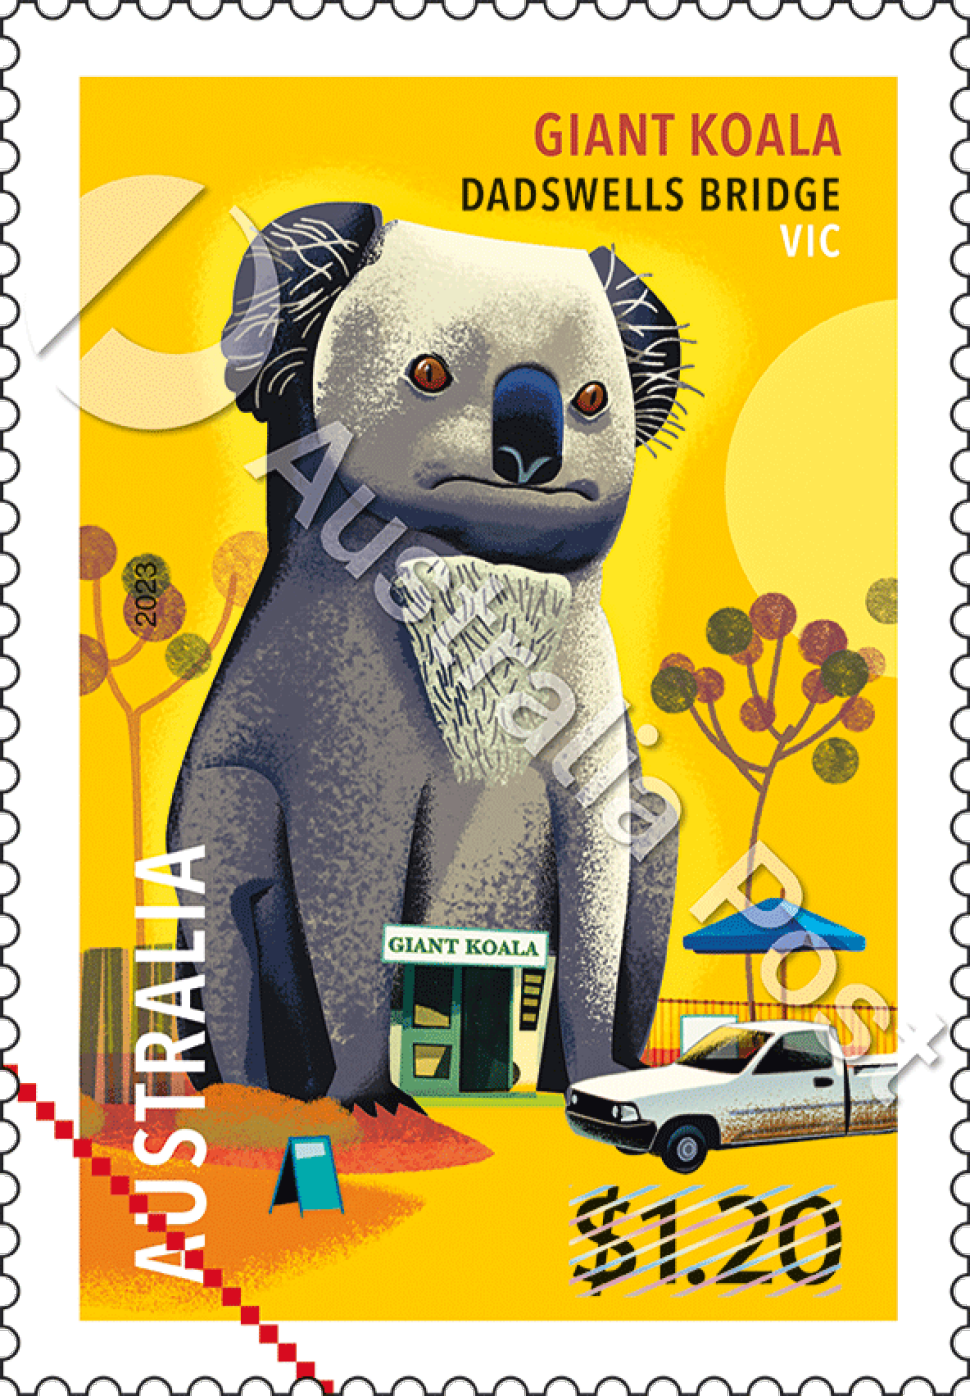 The Giant Koala $1.20 stamp